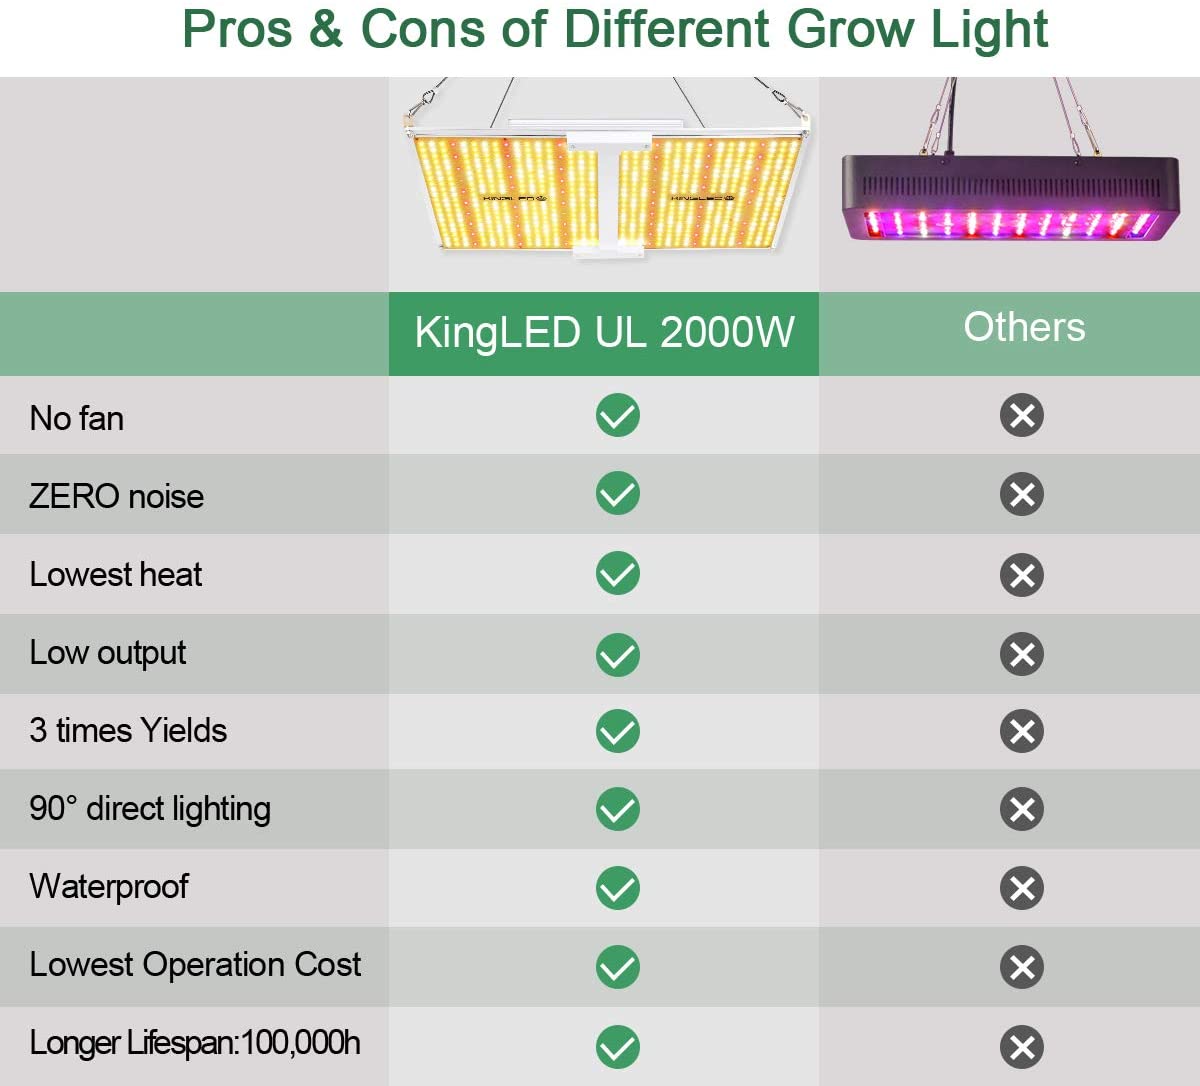 King Plus UL Series 2000W LED Grow Light Full Spectrum Plants Lights for Indoor Veg and Flower Growing Lamp(620 Samsung LED Chips)